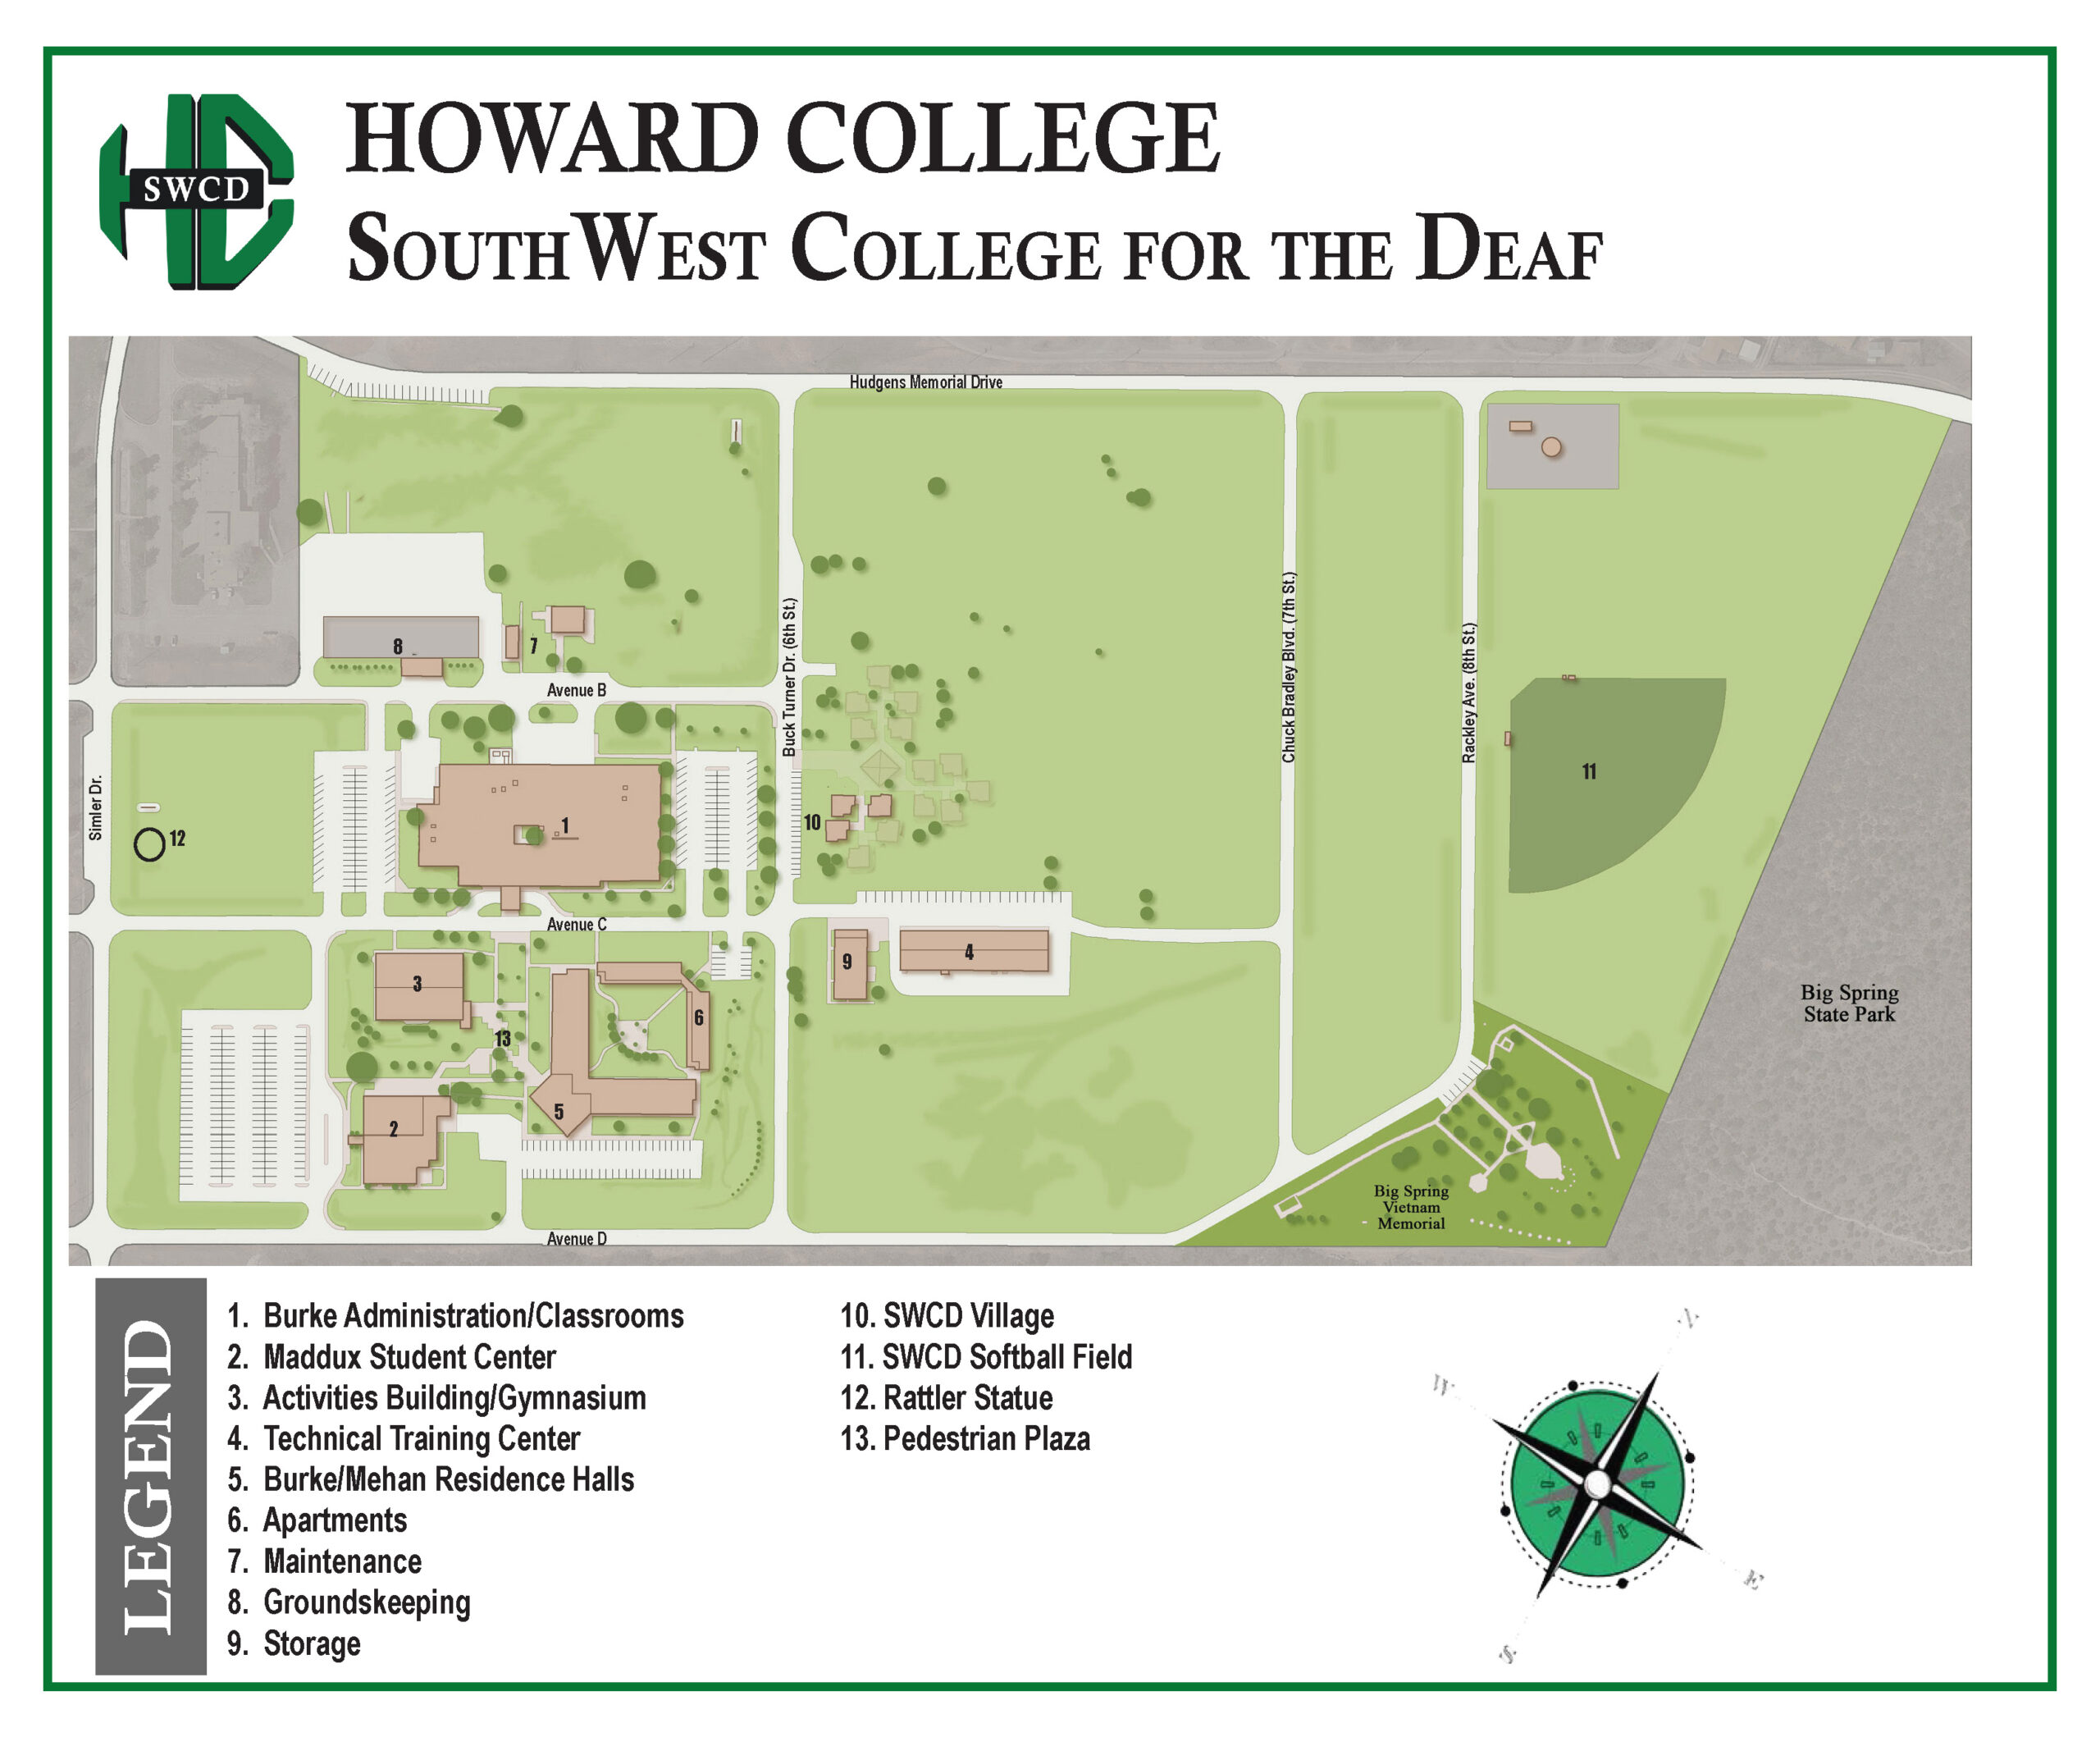 howard university campus